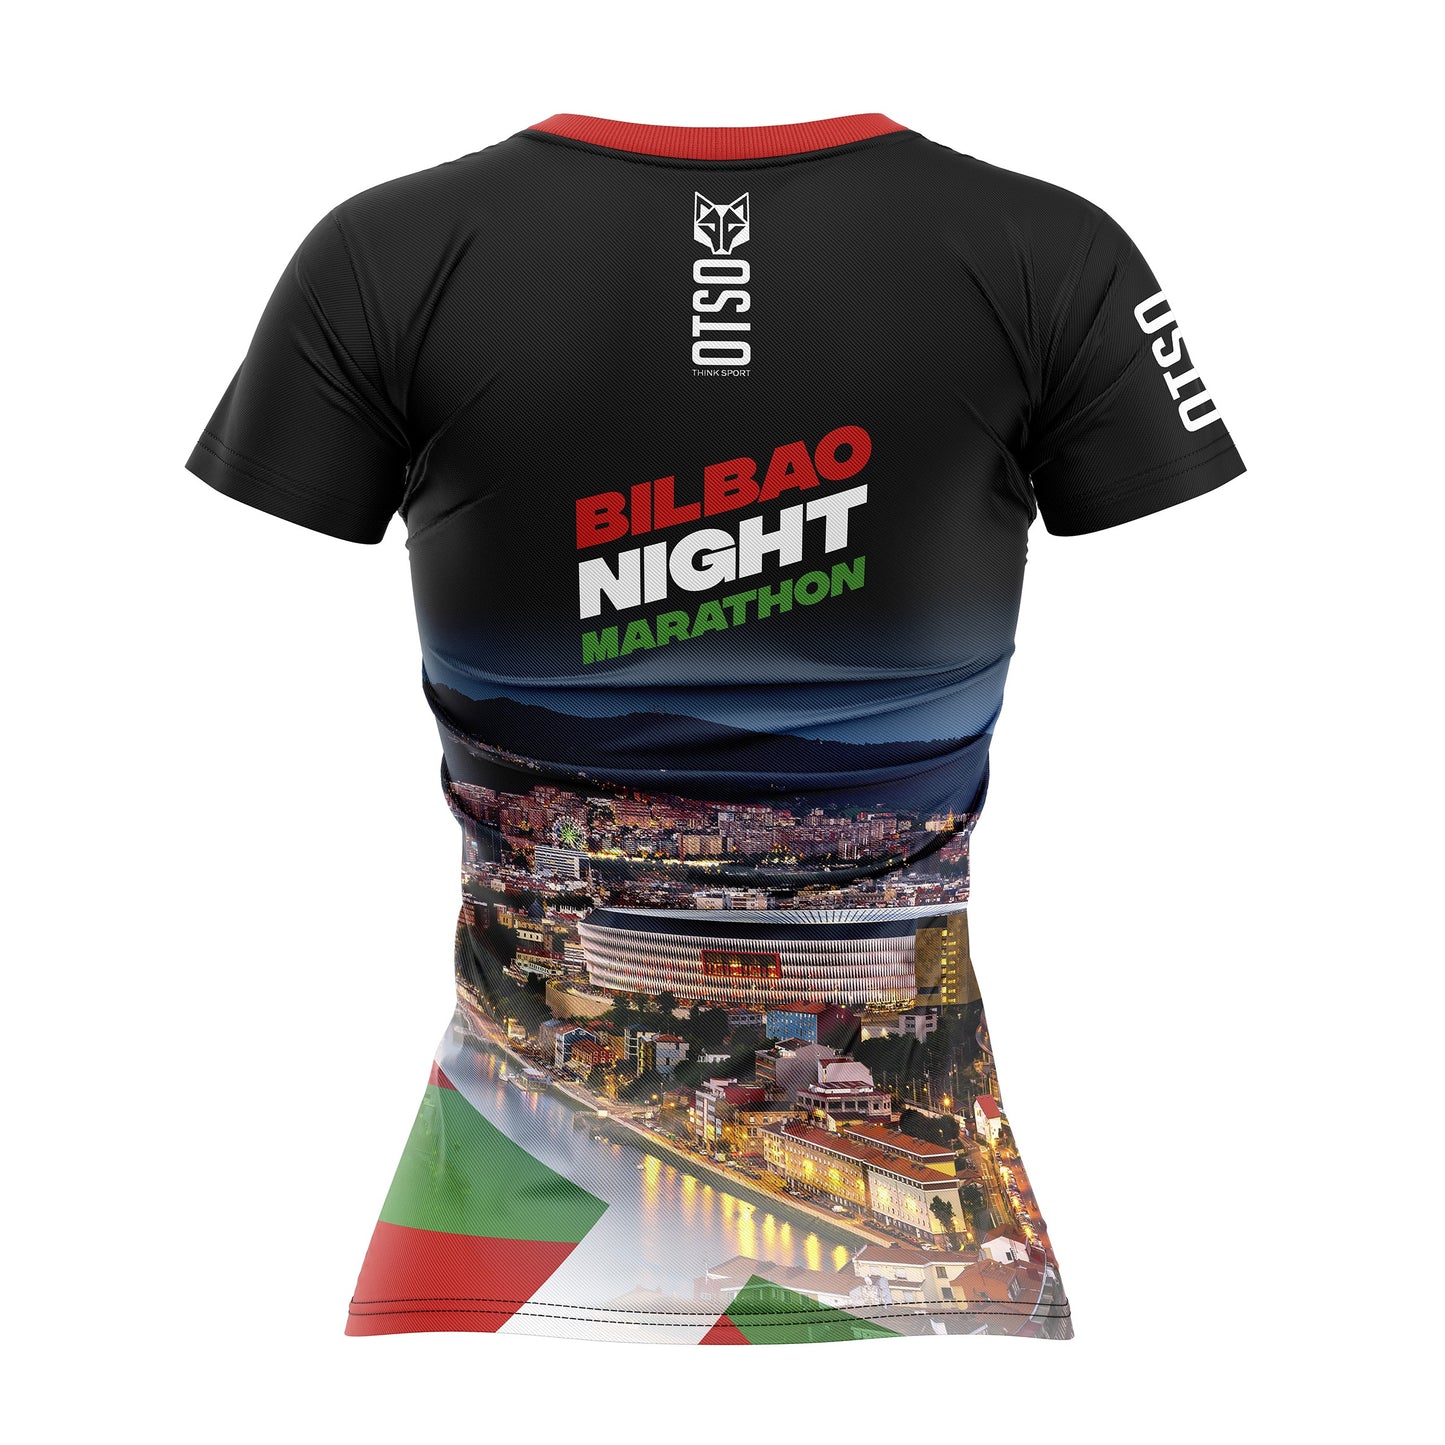 Camiseta manga corta mujer - Bilbao Night Marathon (Outlet)